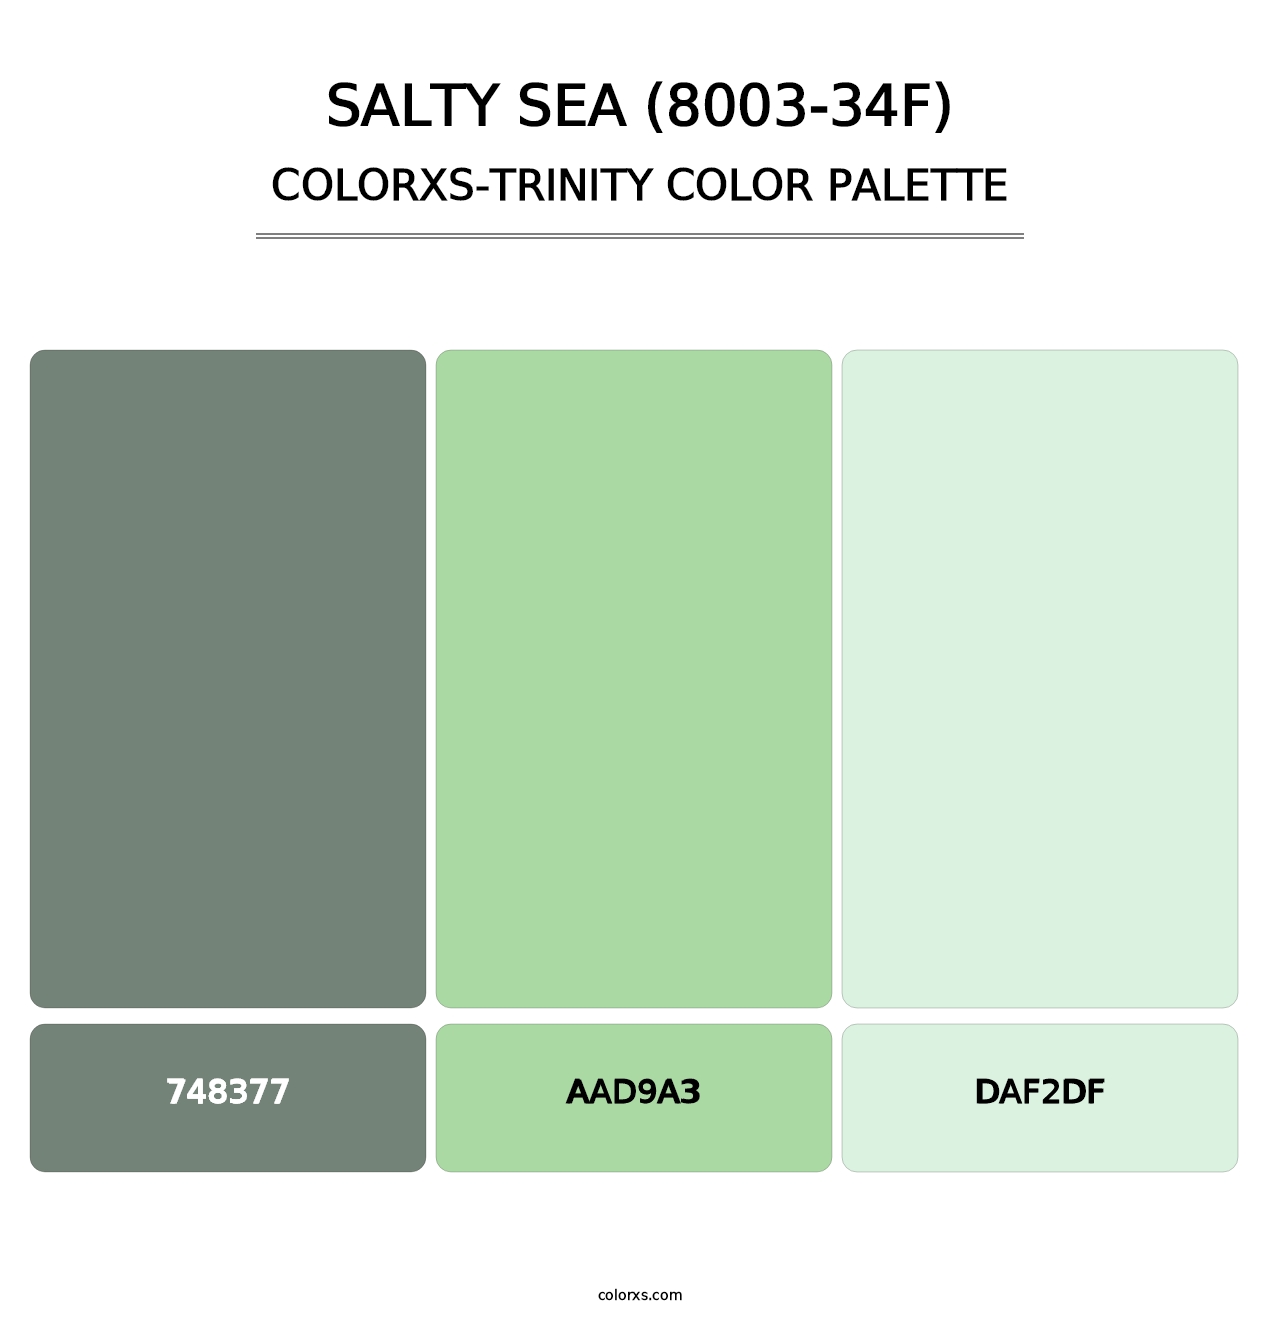 Salty Sea (8003-34F) - Colorxs Trinity Palette